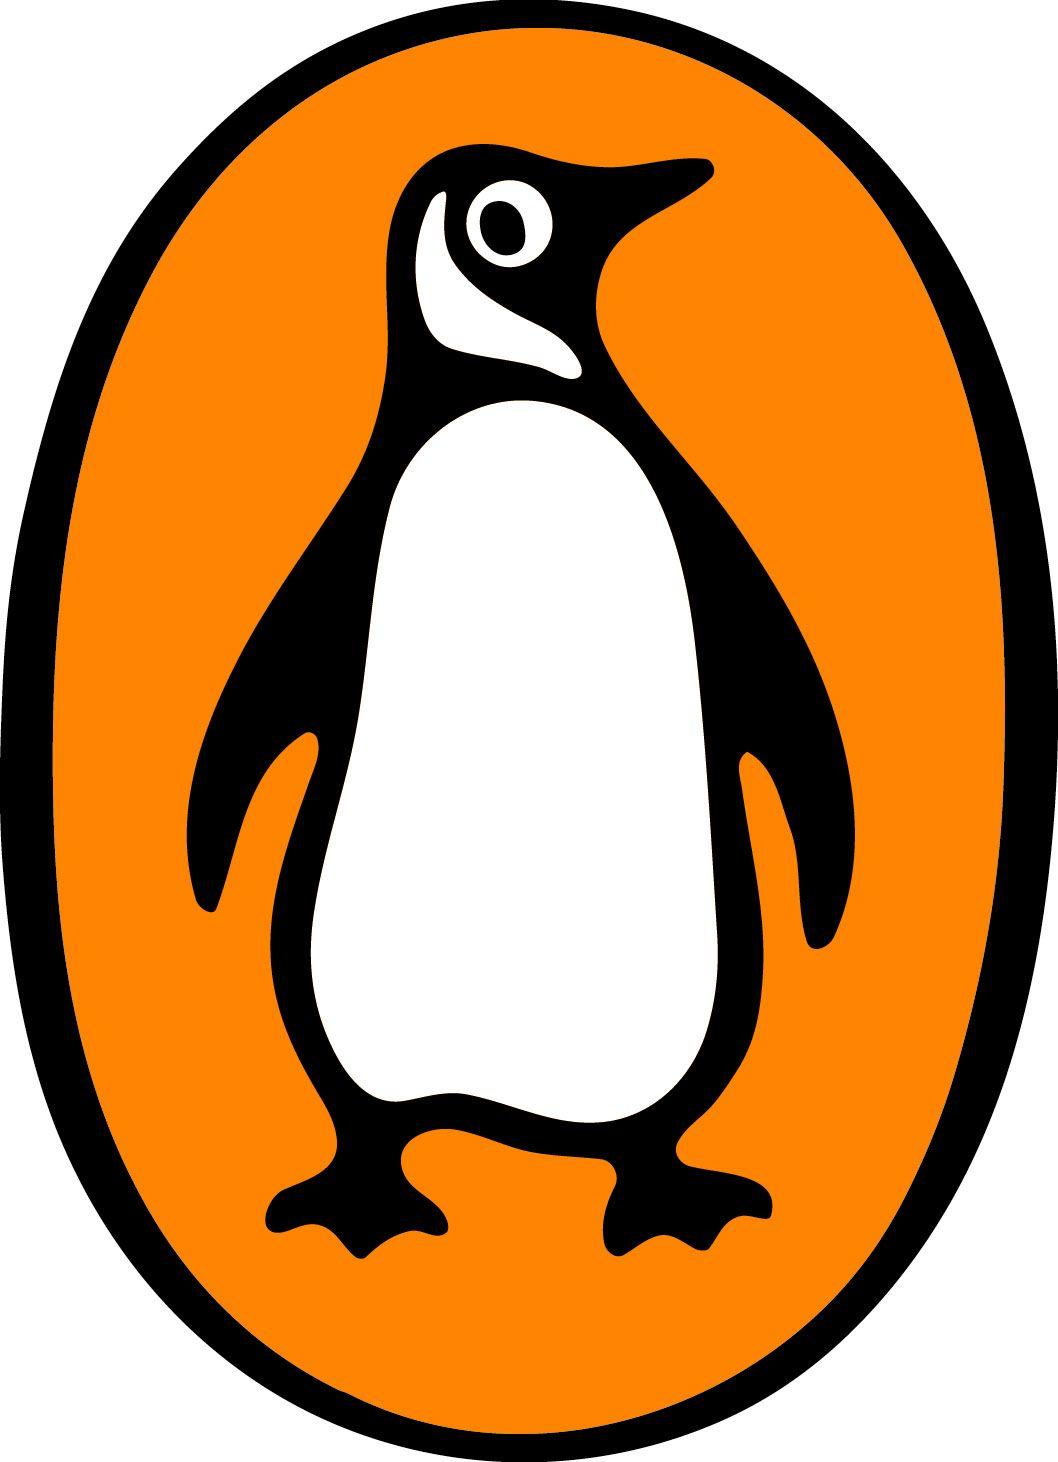 Penguin in Orange Circle Logo - Penguin / Puffin Archives - Page 2 of 2 - Artemis Fowl Confidential